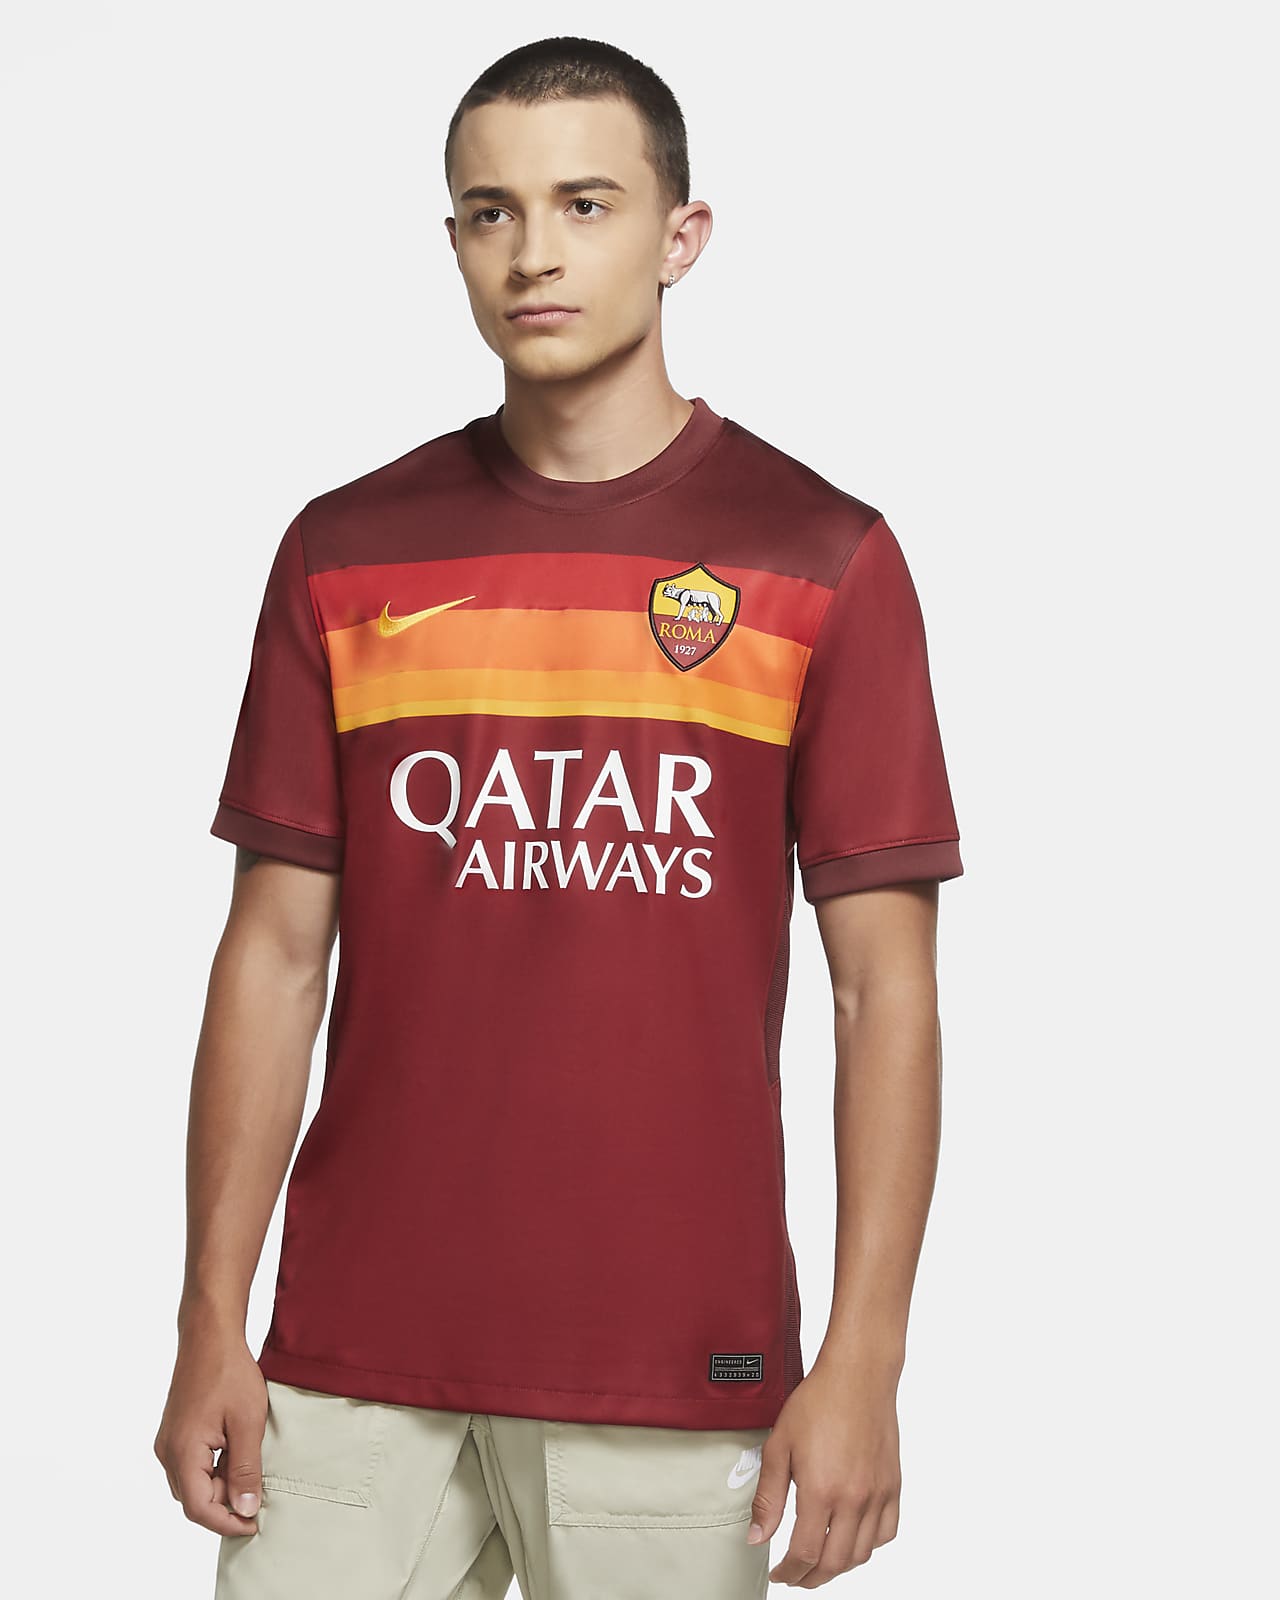 A S Roma 2020 21 Stadium Home Men S Football Shirt Nike Cz [ 1600 x 1280 Pixel ]